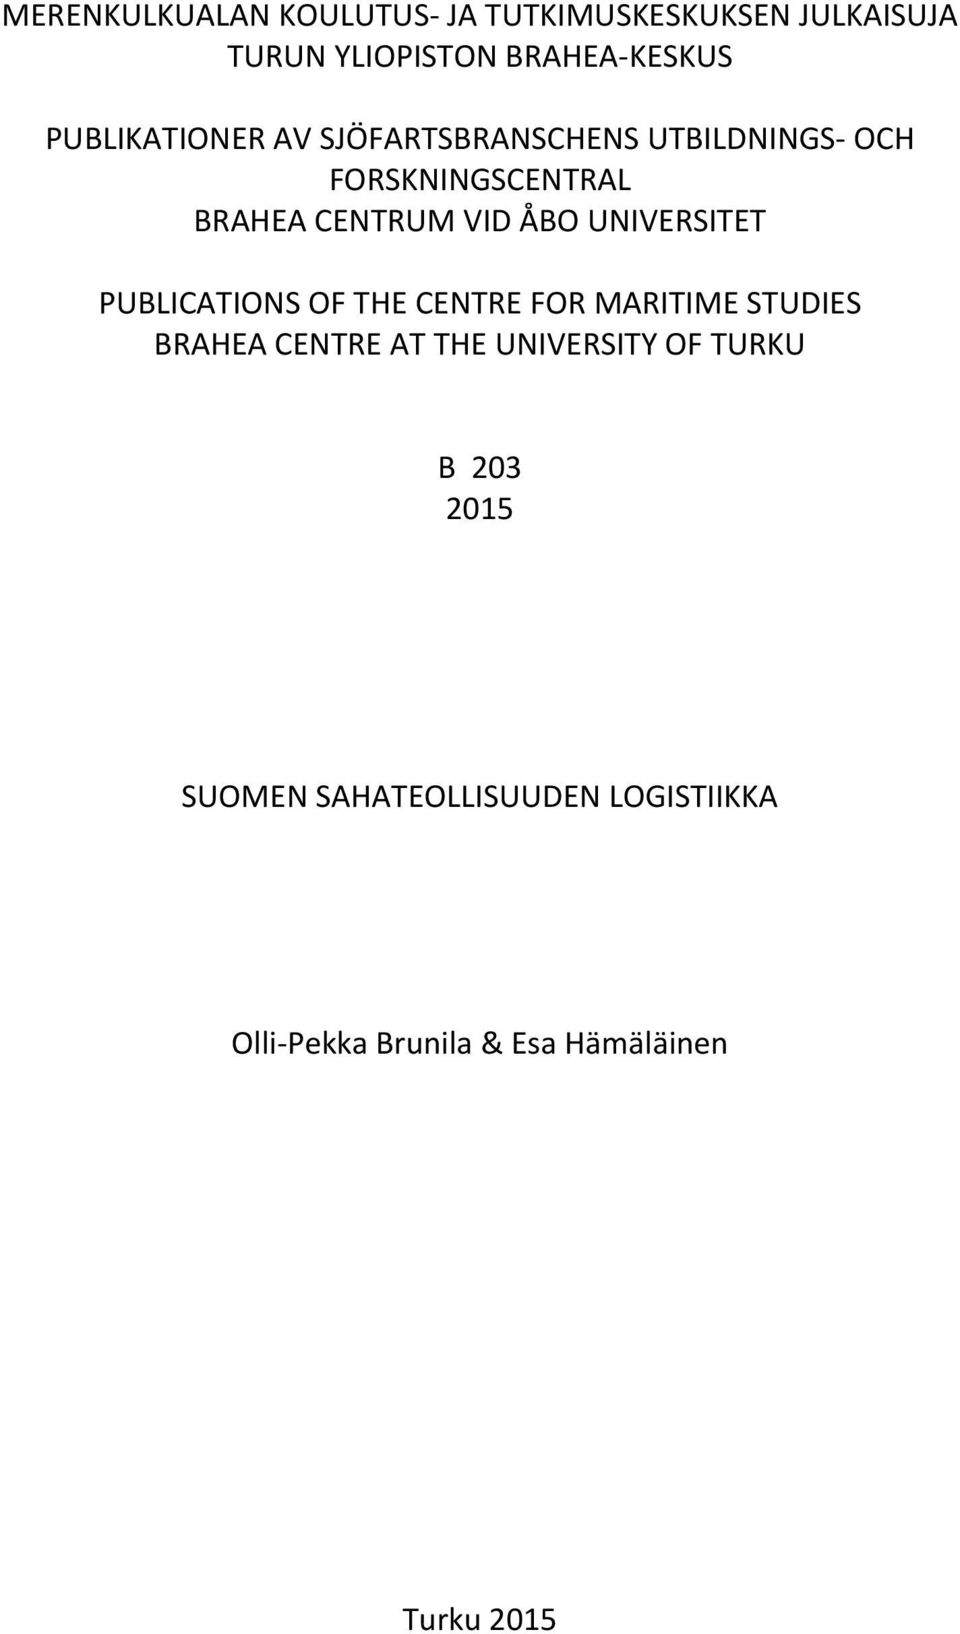 UNIVERSITET PUBLICATIONS OF THE CENTRE FOR MARITIME STUDIES BRAHEA CENTRE AT THE UNIVERSITY OF